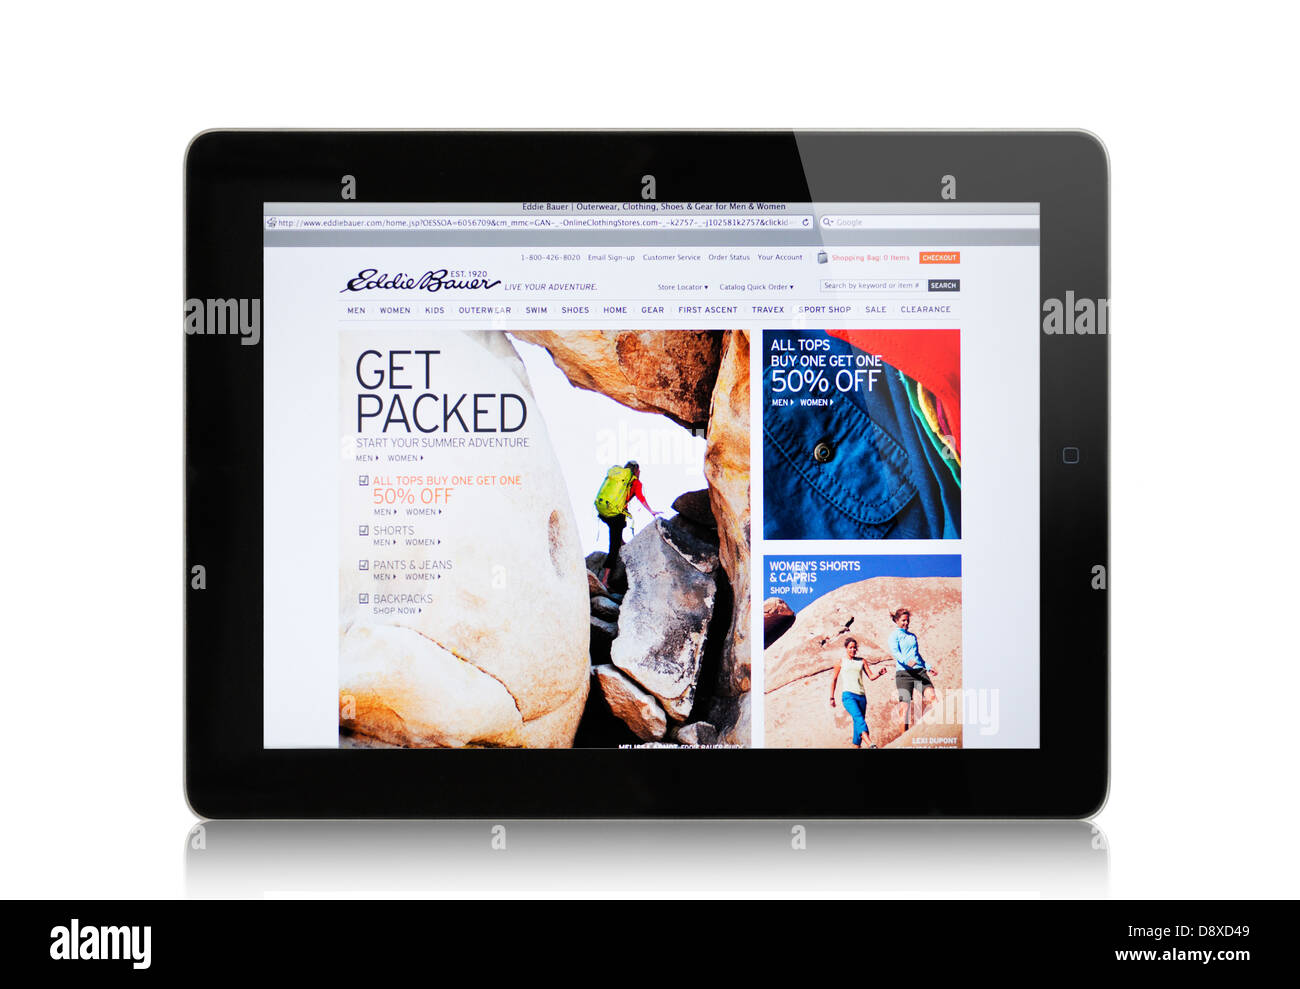 Eddie Bauer clothing store on iPad screen Stock Photo - Alamy